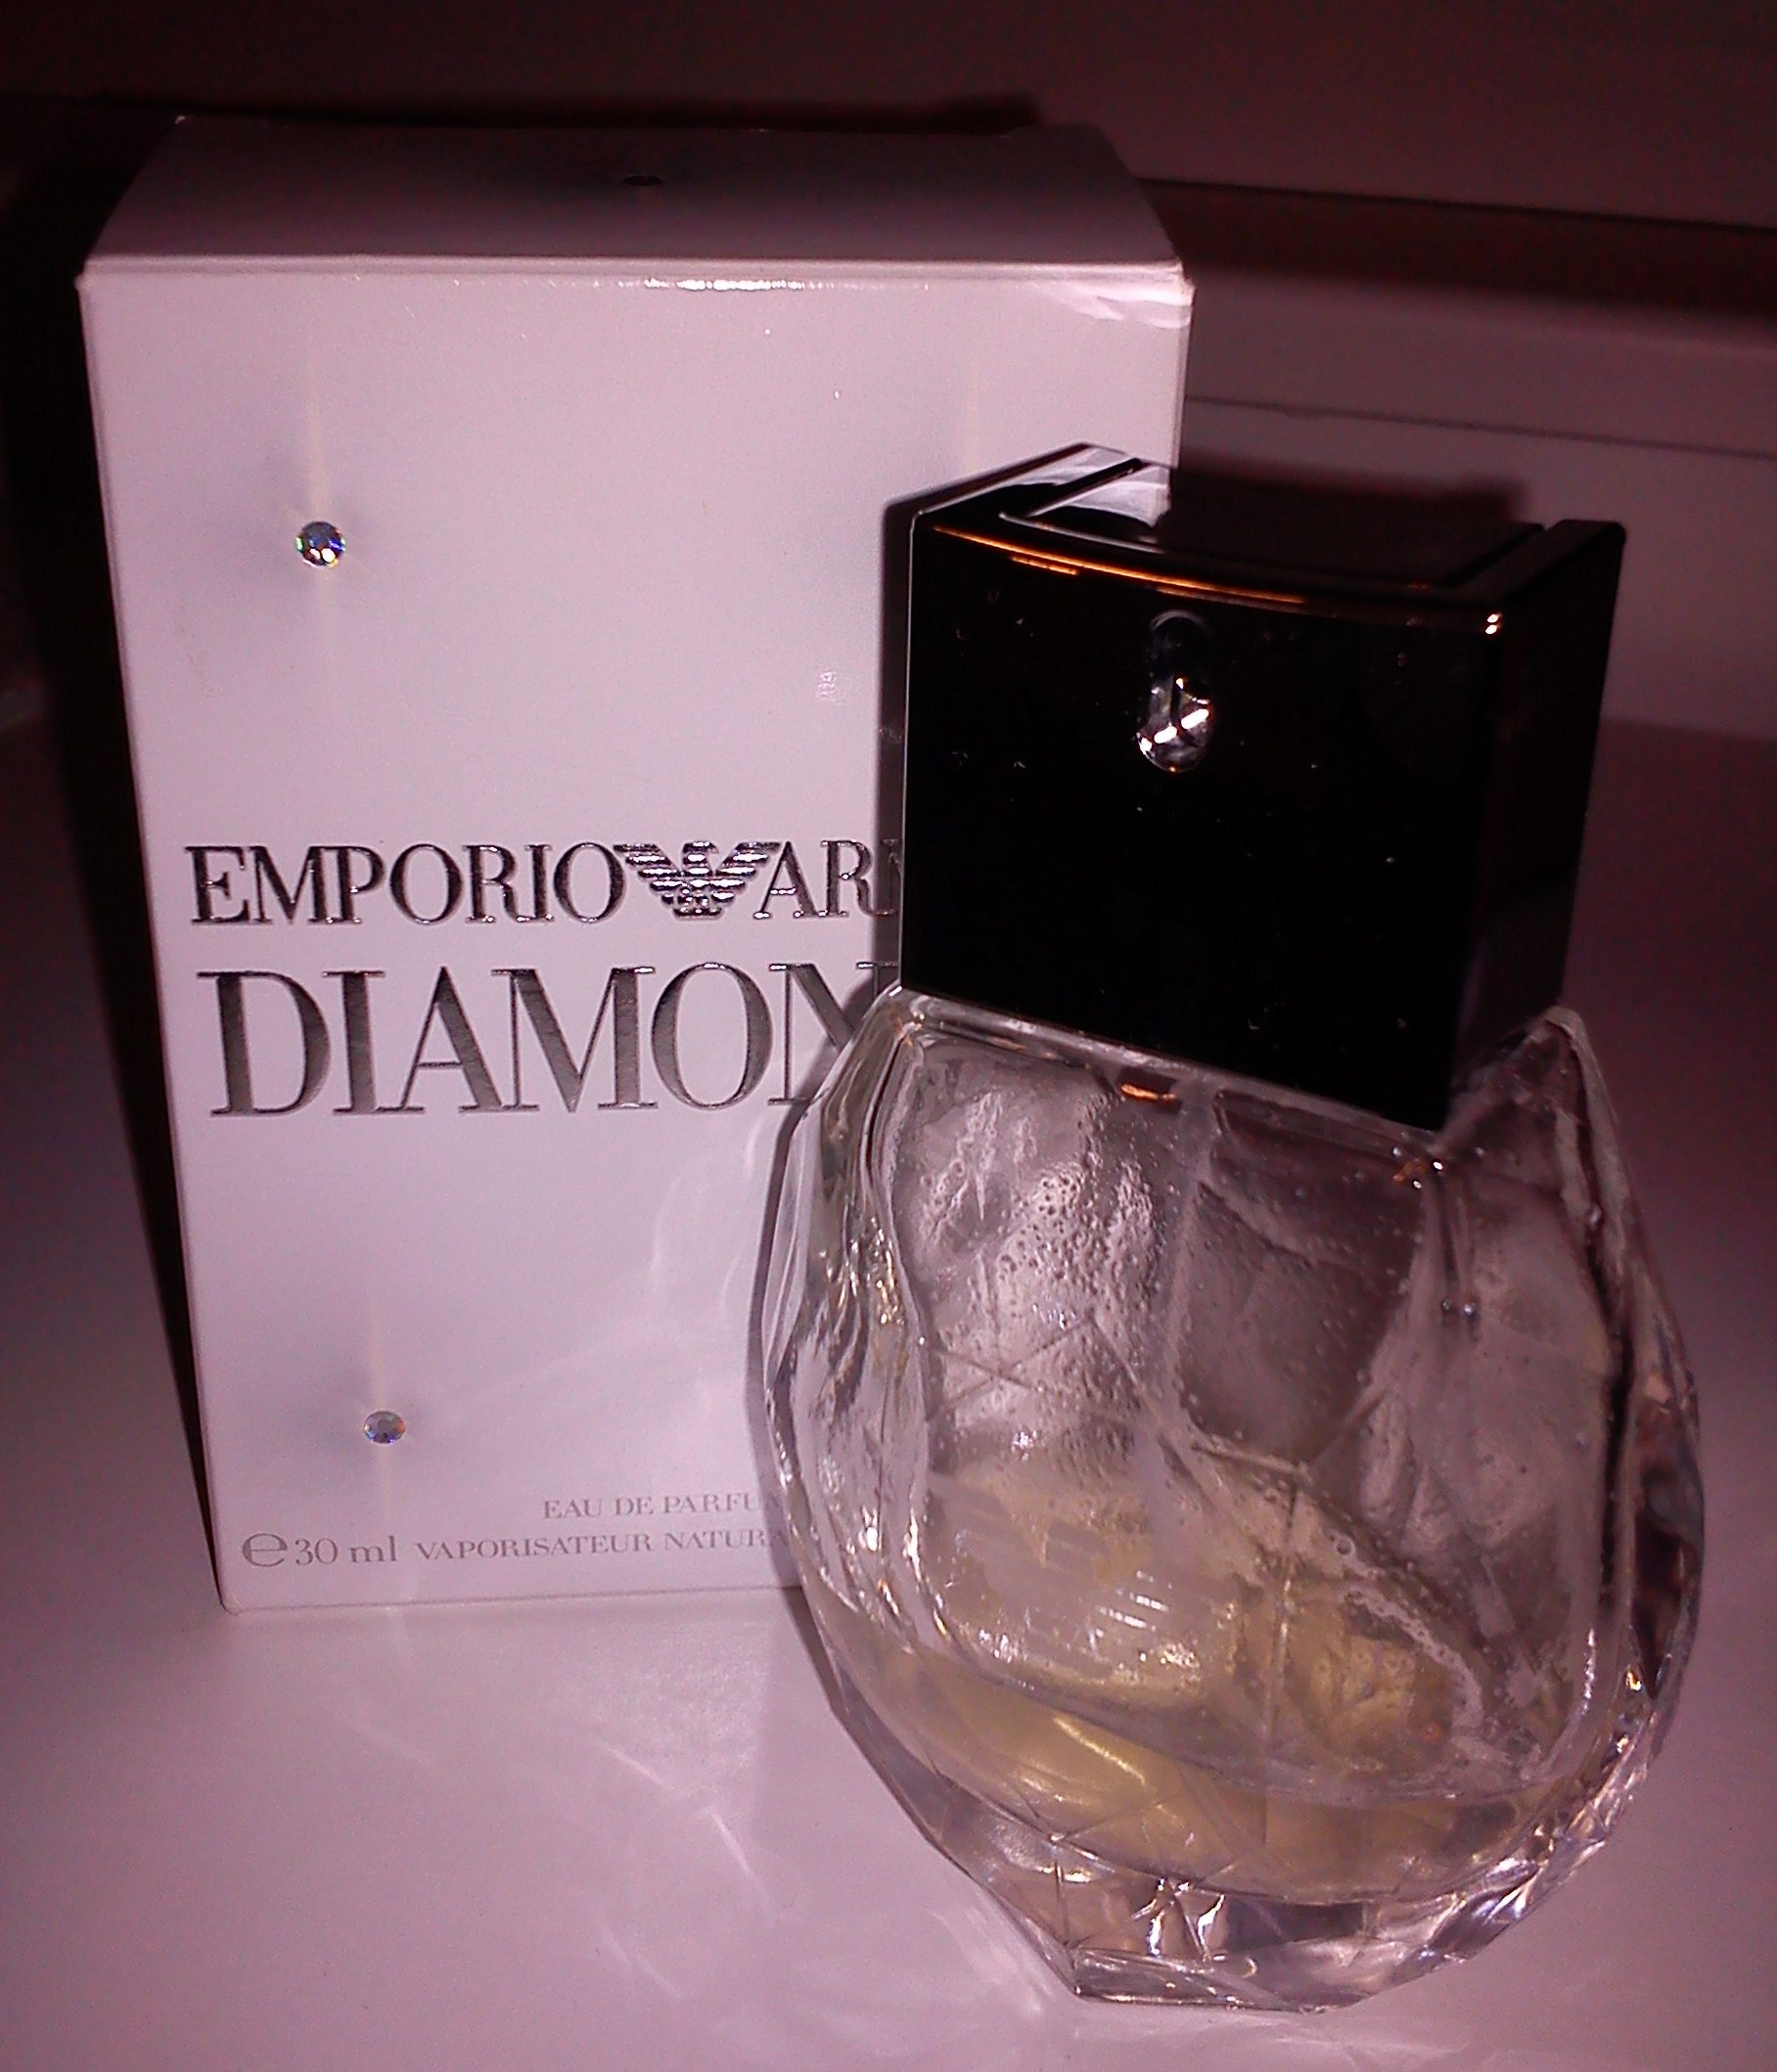 armani diamonds perfume review